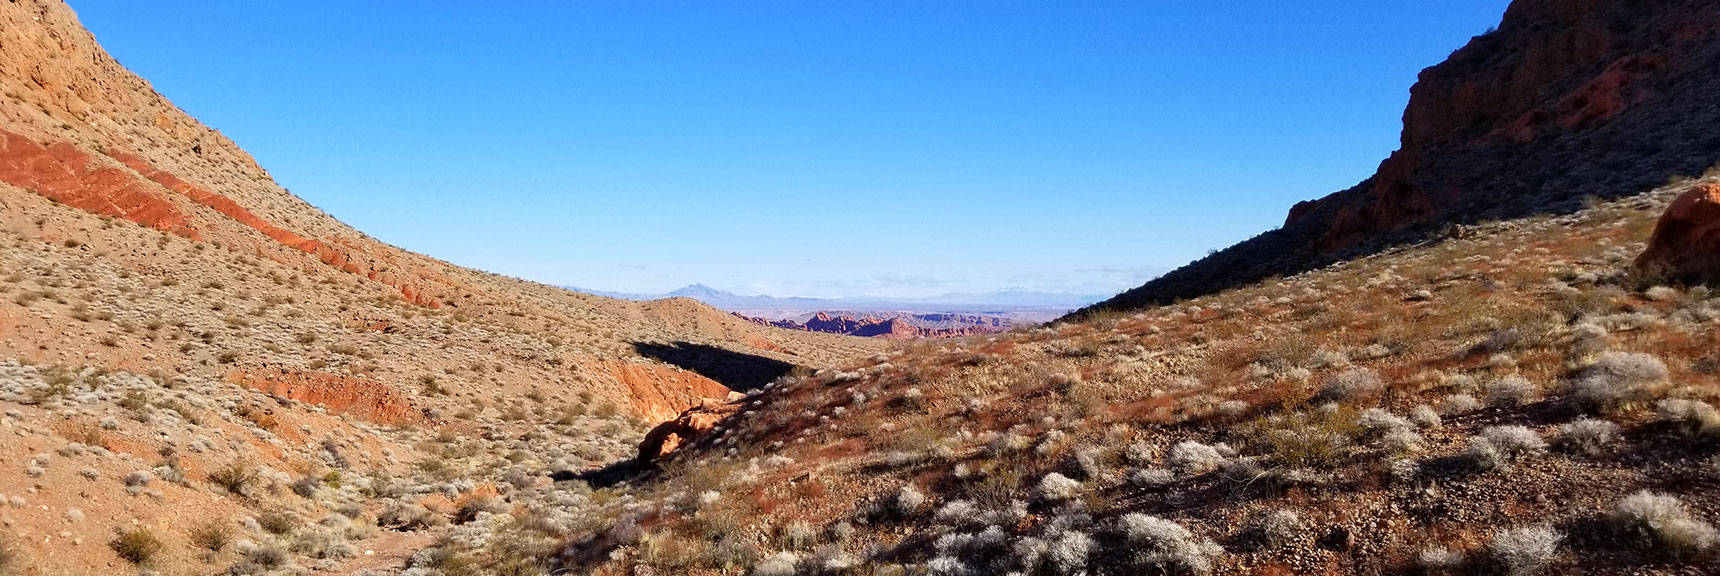 Rounding the Loop on Pinnacles Loop Trail in Valley of Fire State Park, Nevada